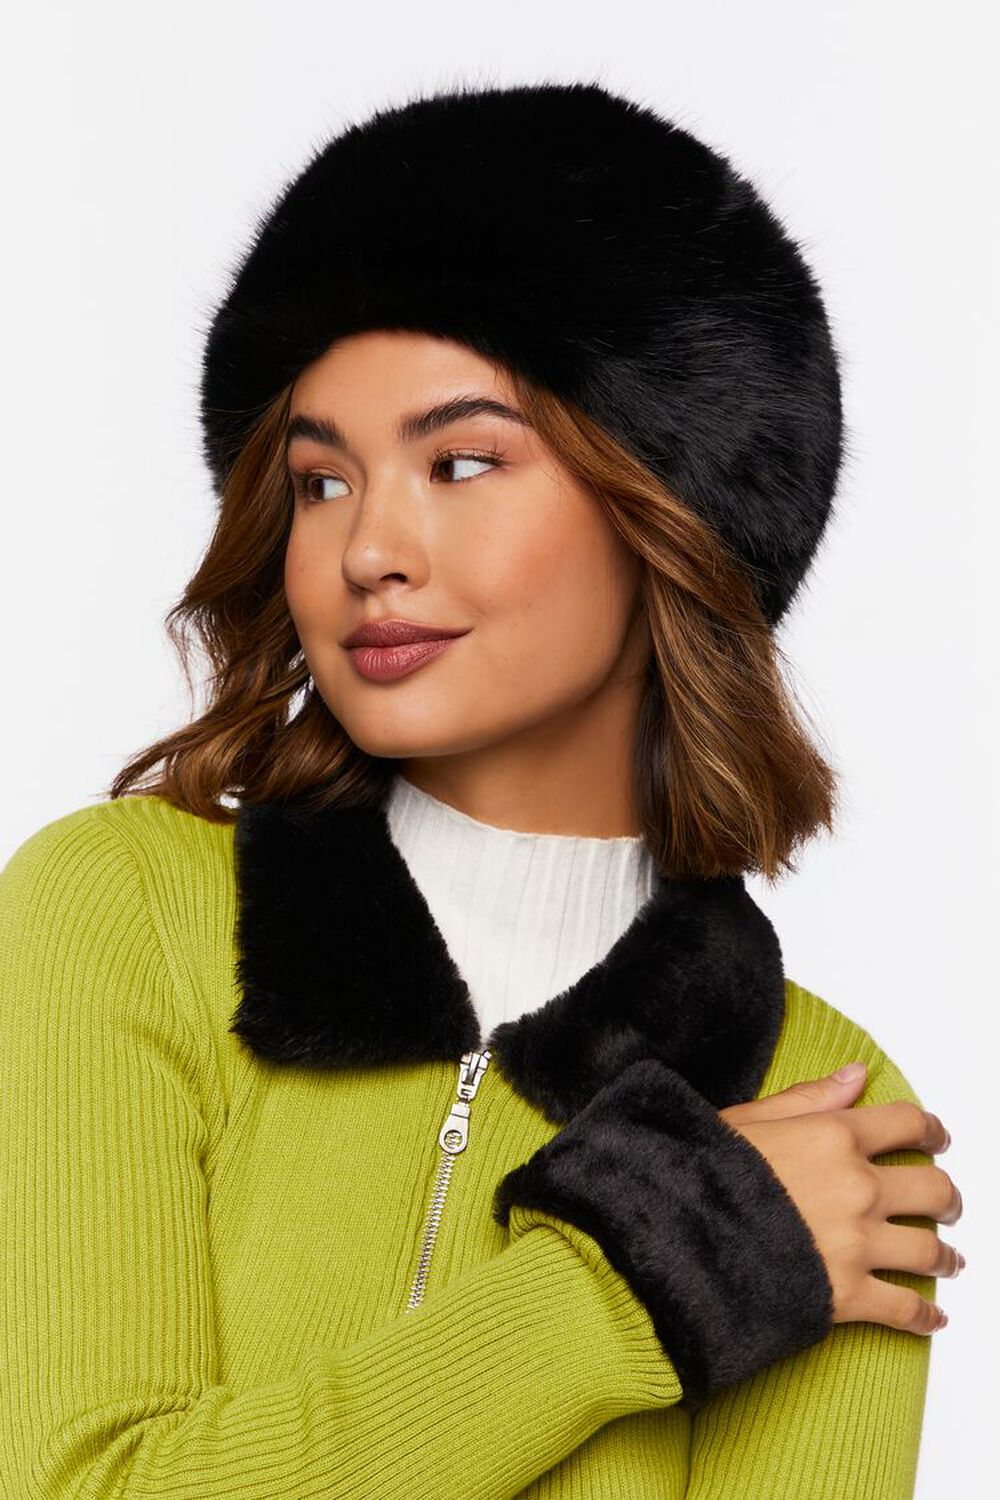 Estate Faux Fur Hat - Lock & Co. Hats for Men & Women